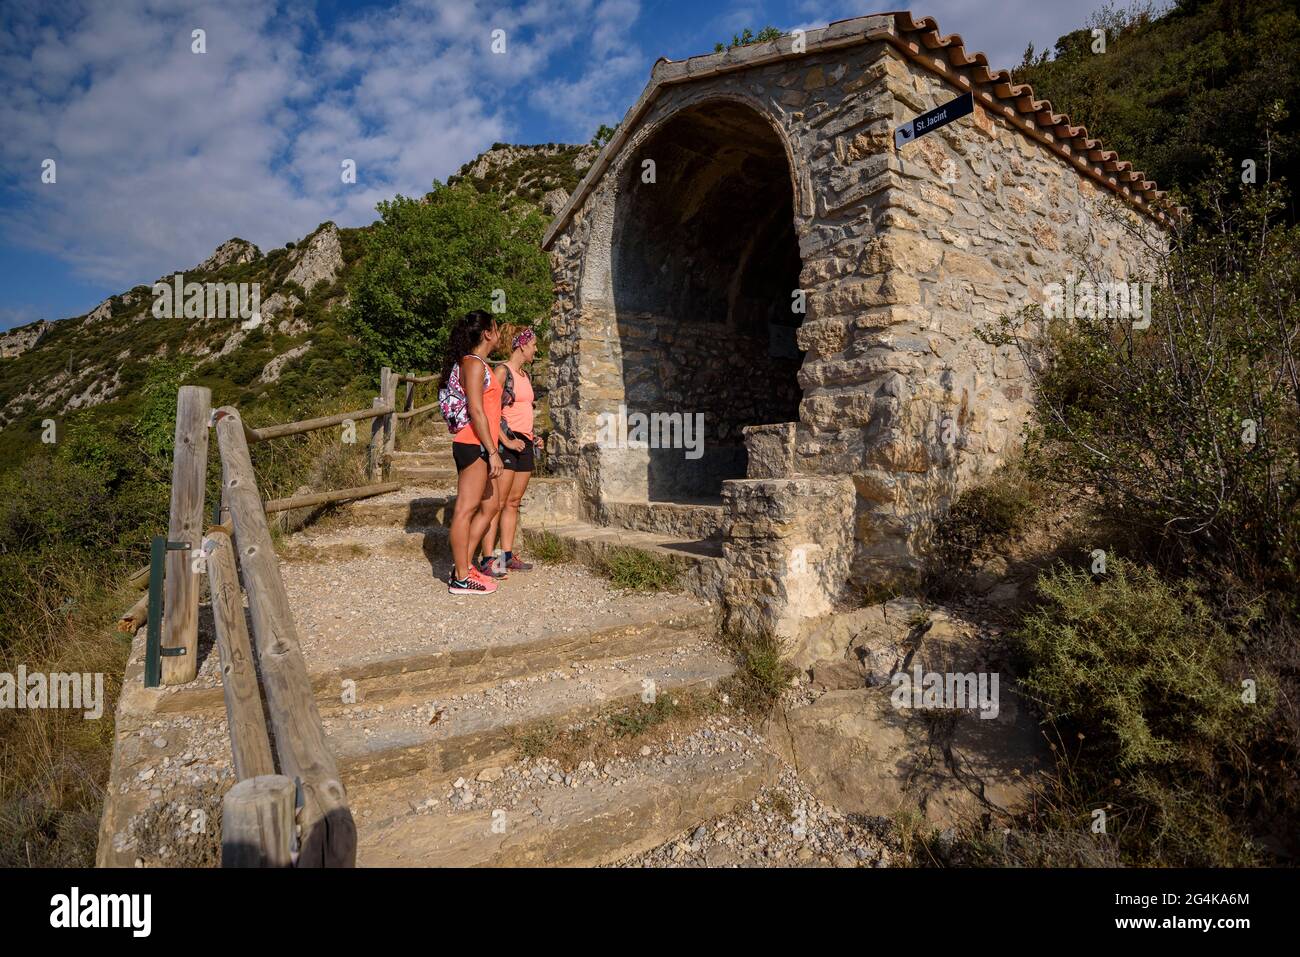 Hikers walking from Berga to the Queralt sanctuary along the Camí de la Solana path. Chapel of Sant Jacint (Berguedà, Catalonia, Spain, Pyrenees) Stock Photo